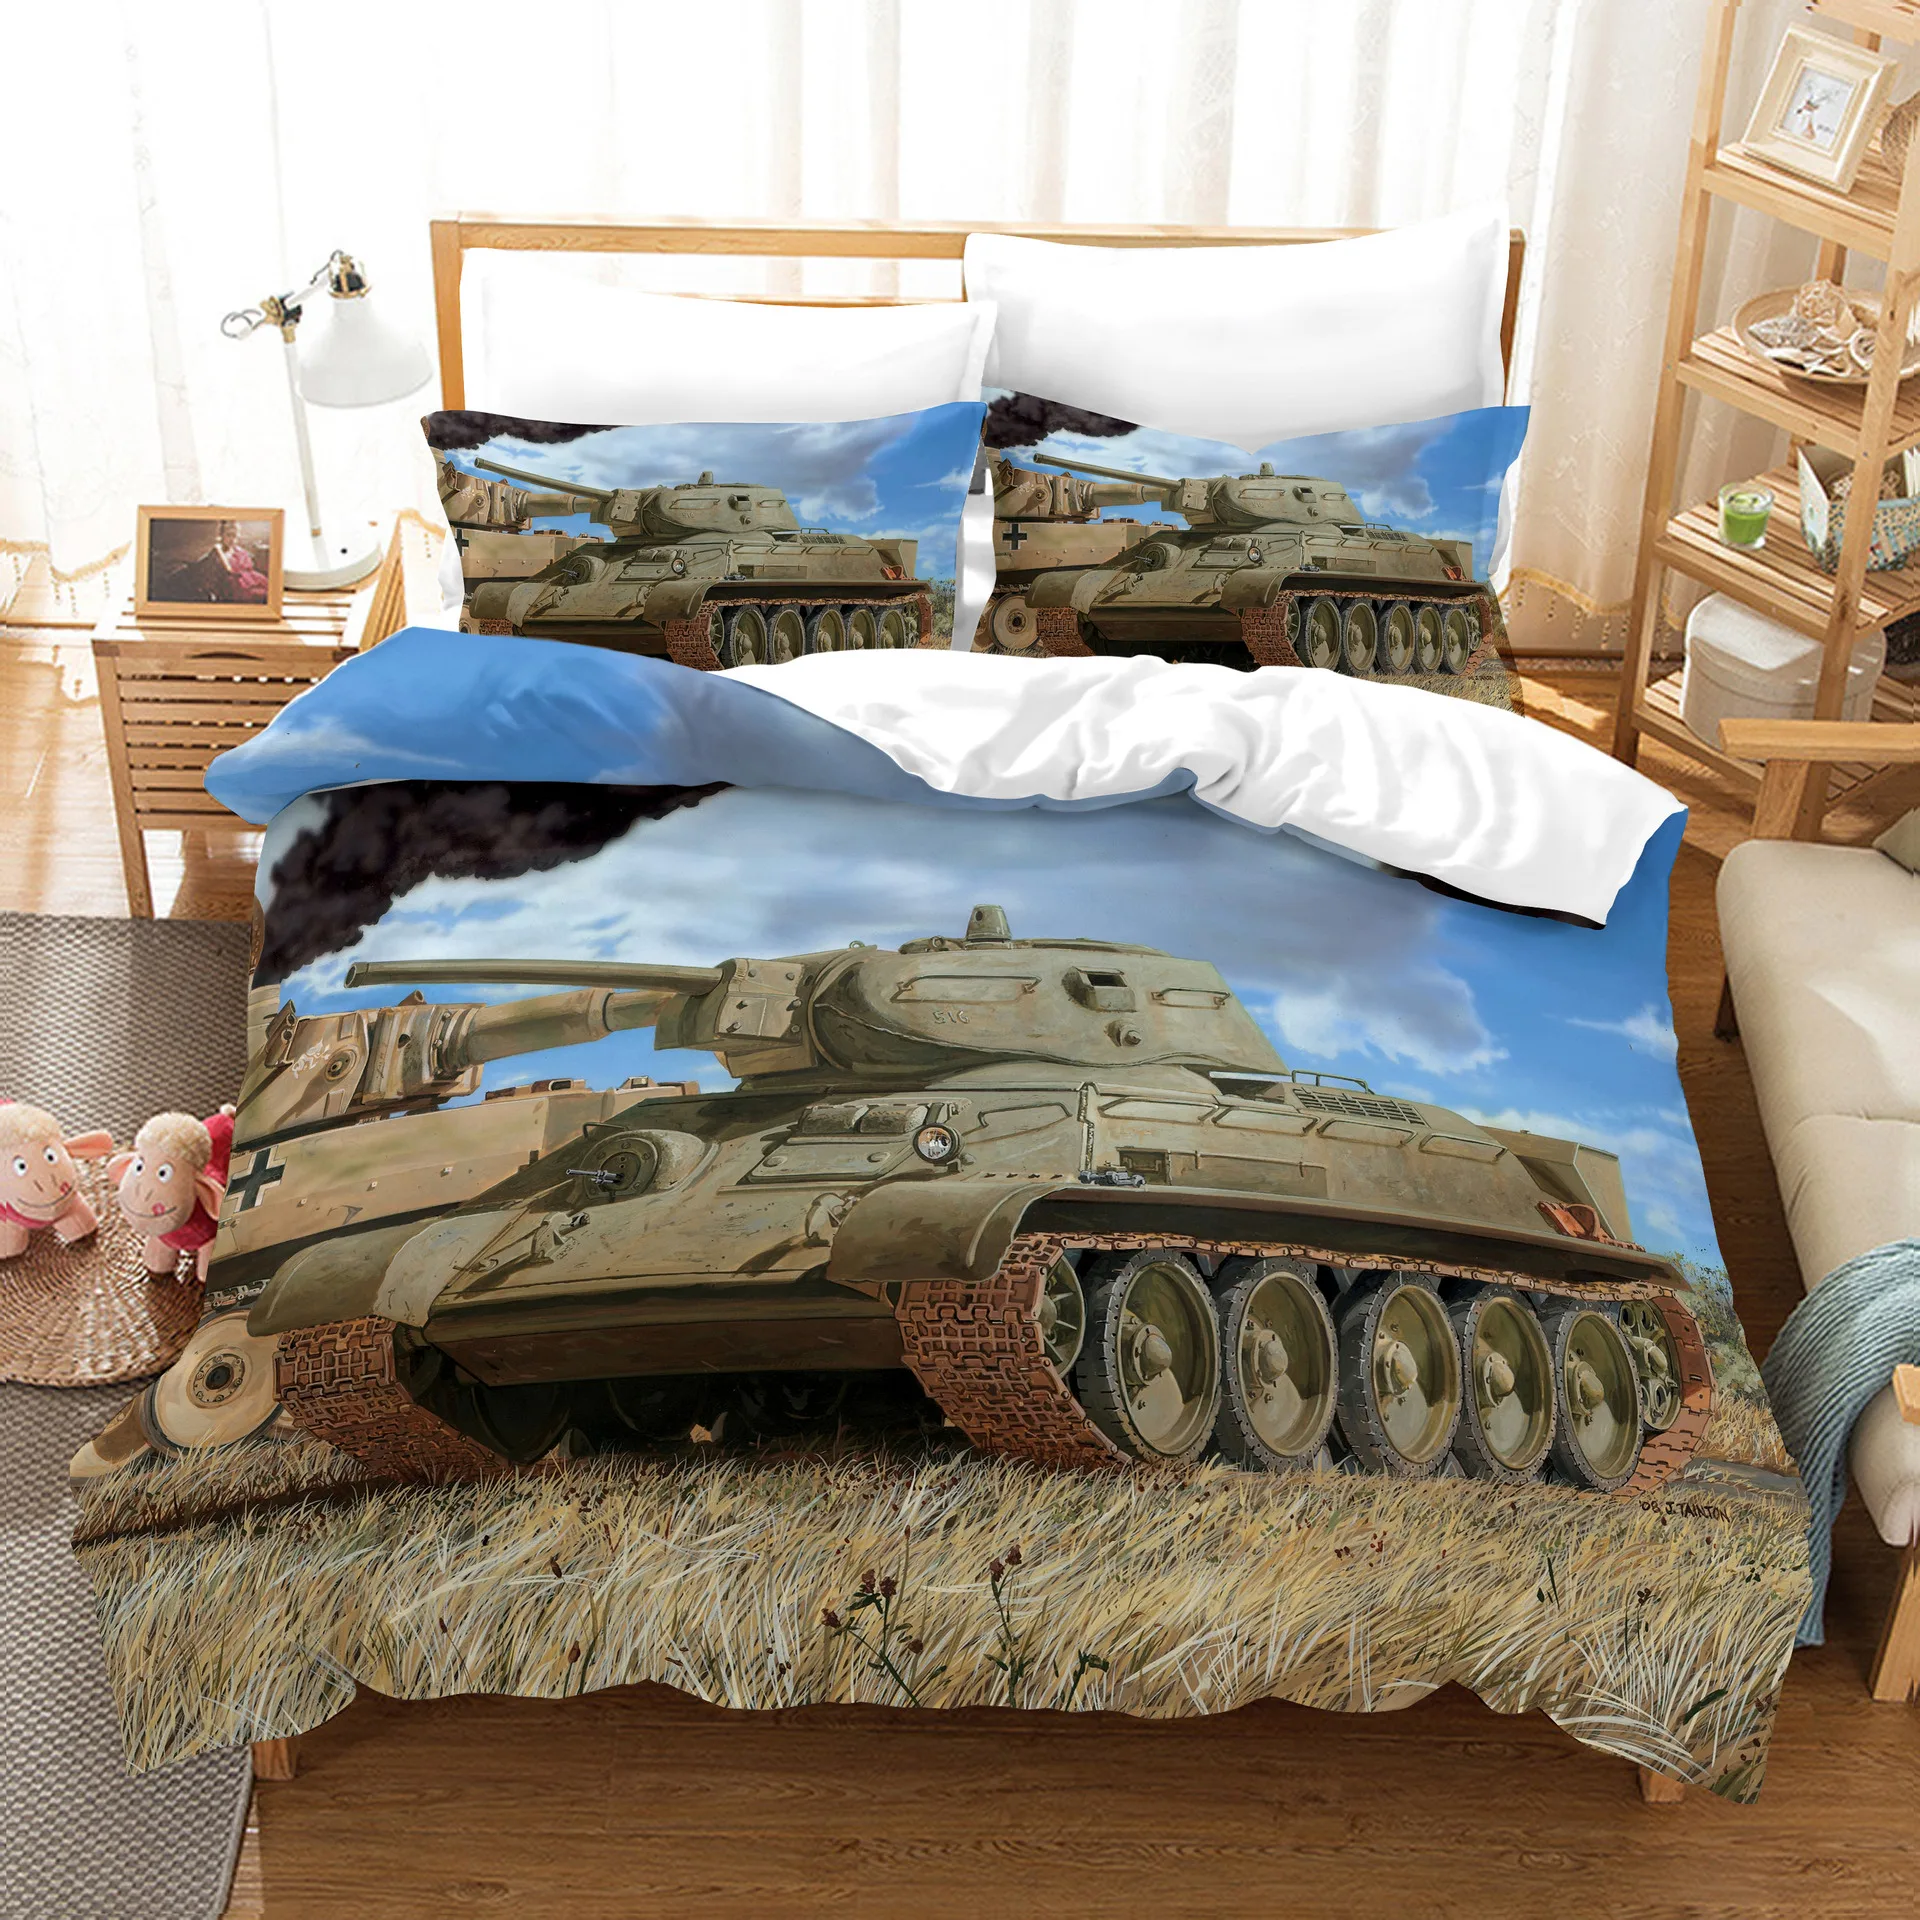 

Tank Duvet Cover Set War Military Theme Comforter Cover for Kids Boys Teens Men Decor Polyester Bedspread Cover